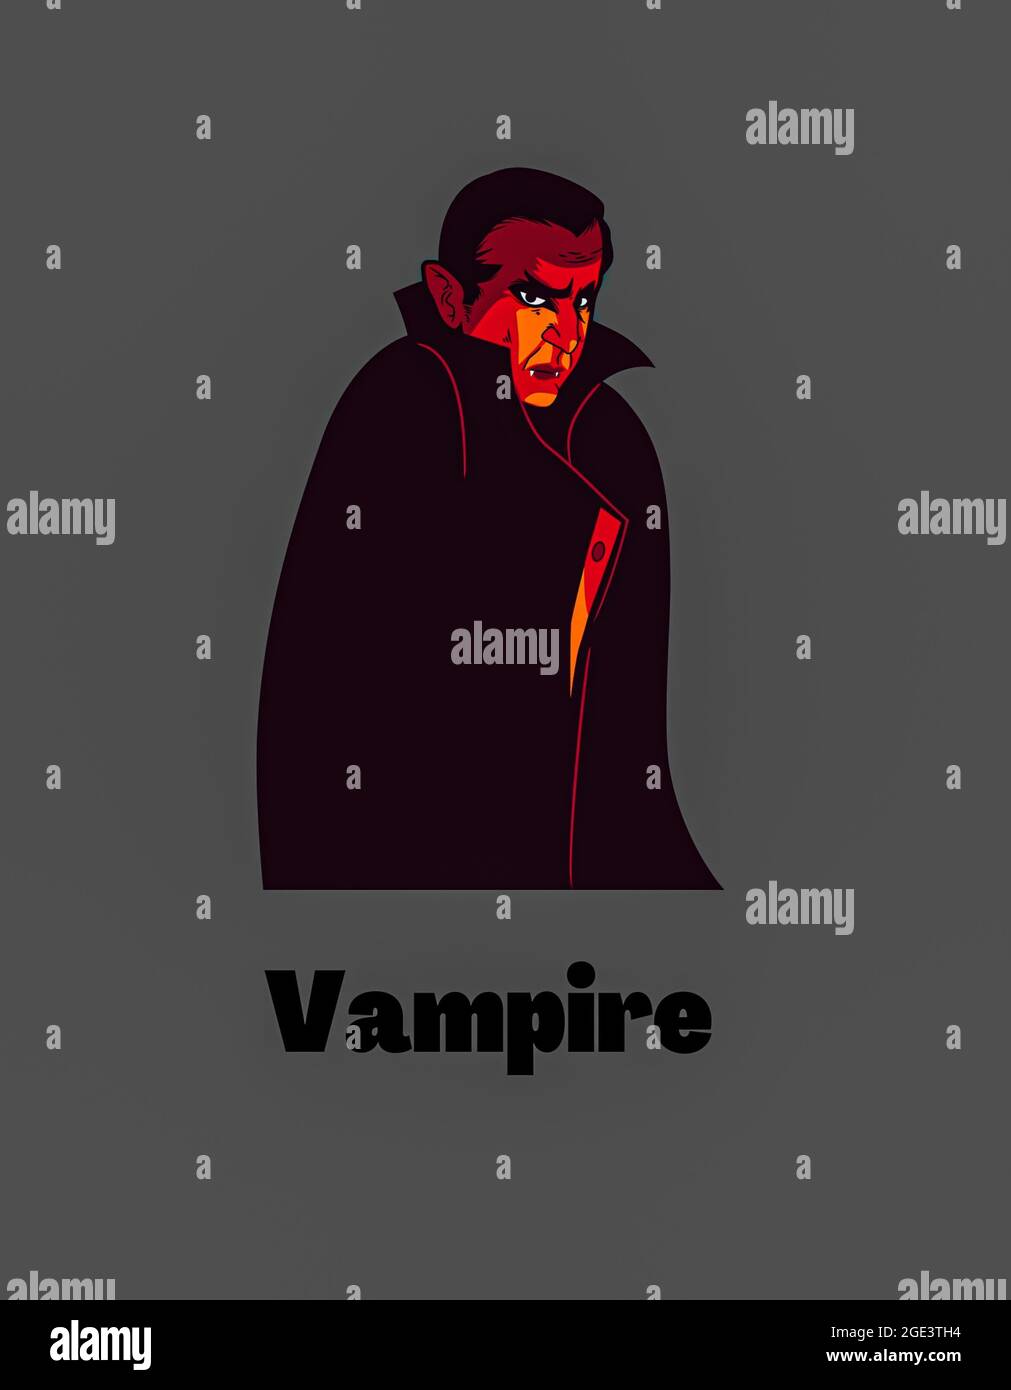 Vampire man graphic design Stock Photo